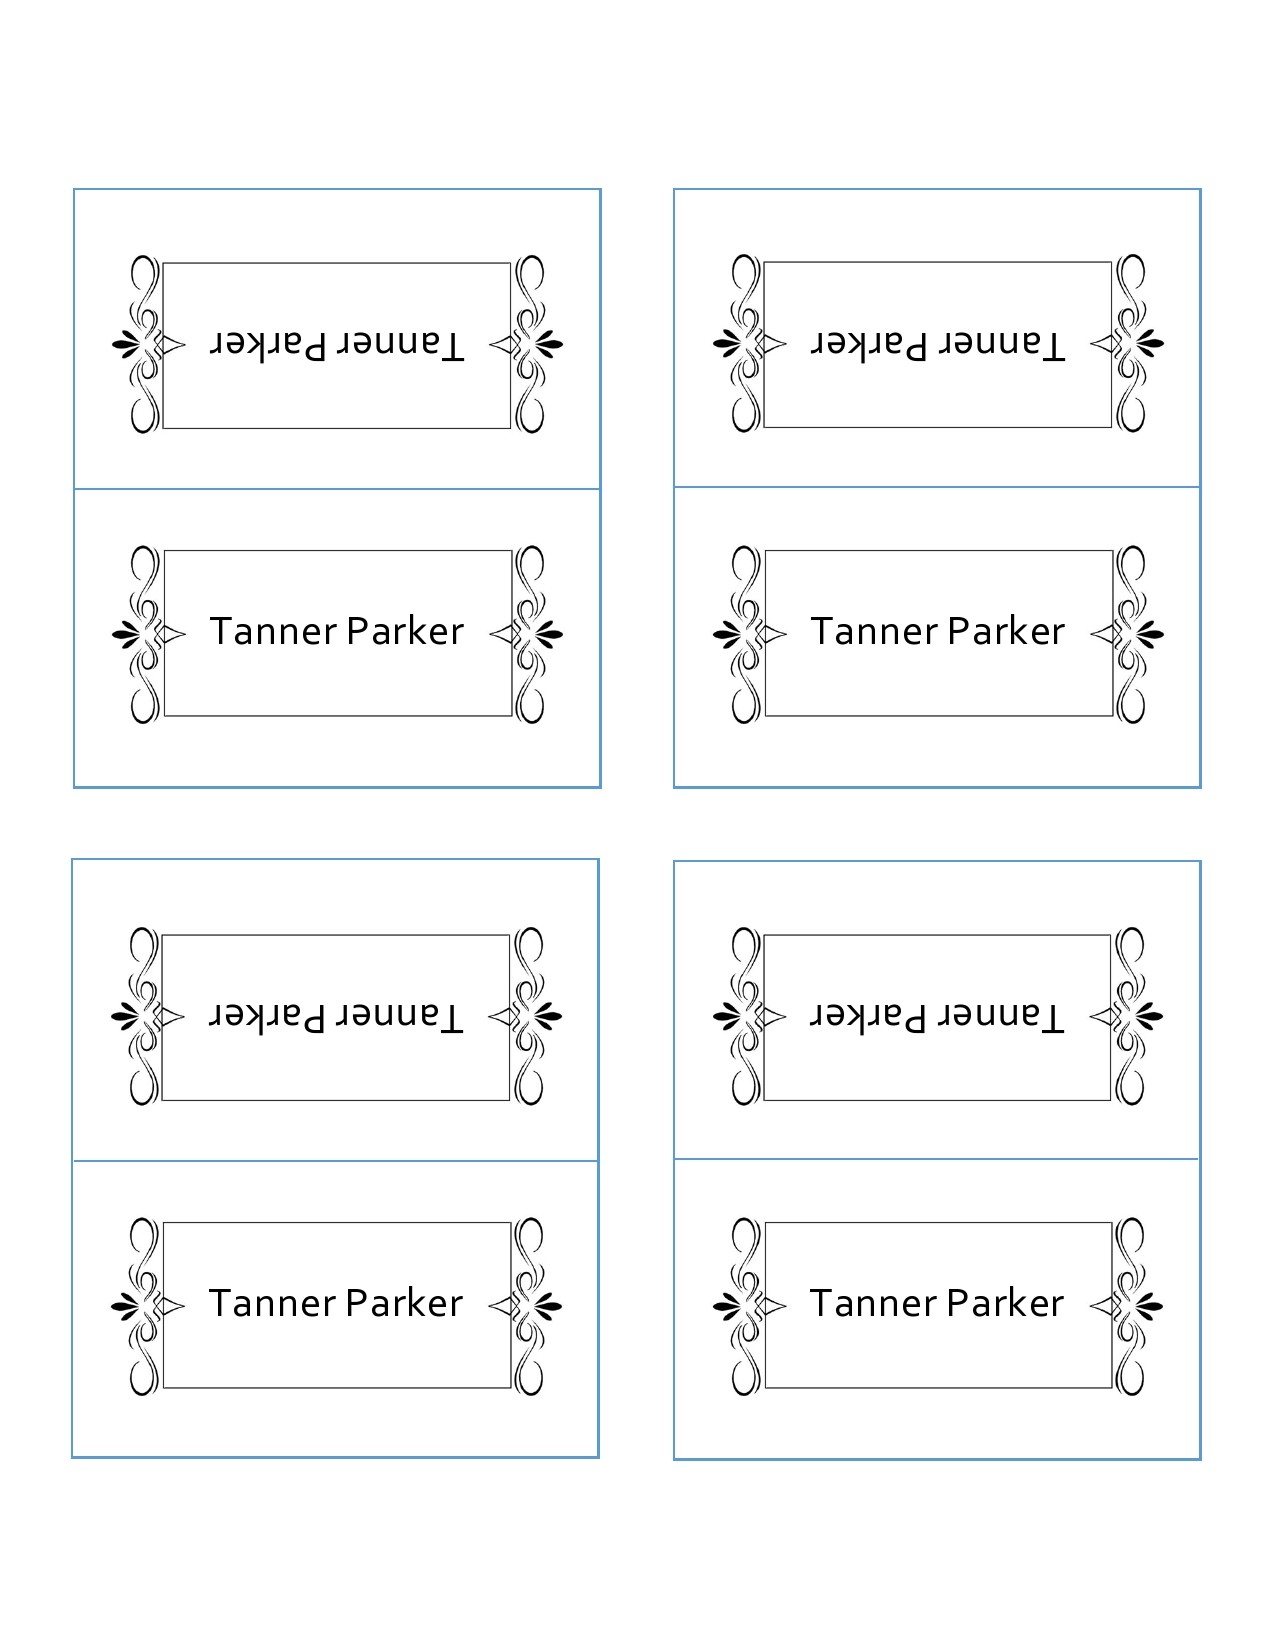 sirenă groapă geniu template for place cards 24 per sheet Pertaining To Place Card Template 6 Per Sheet